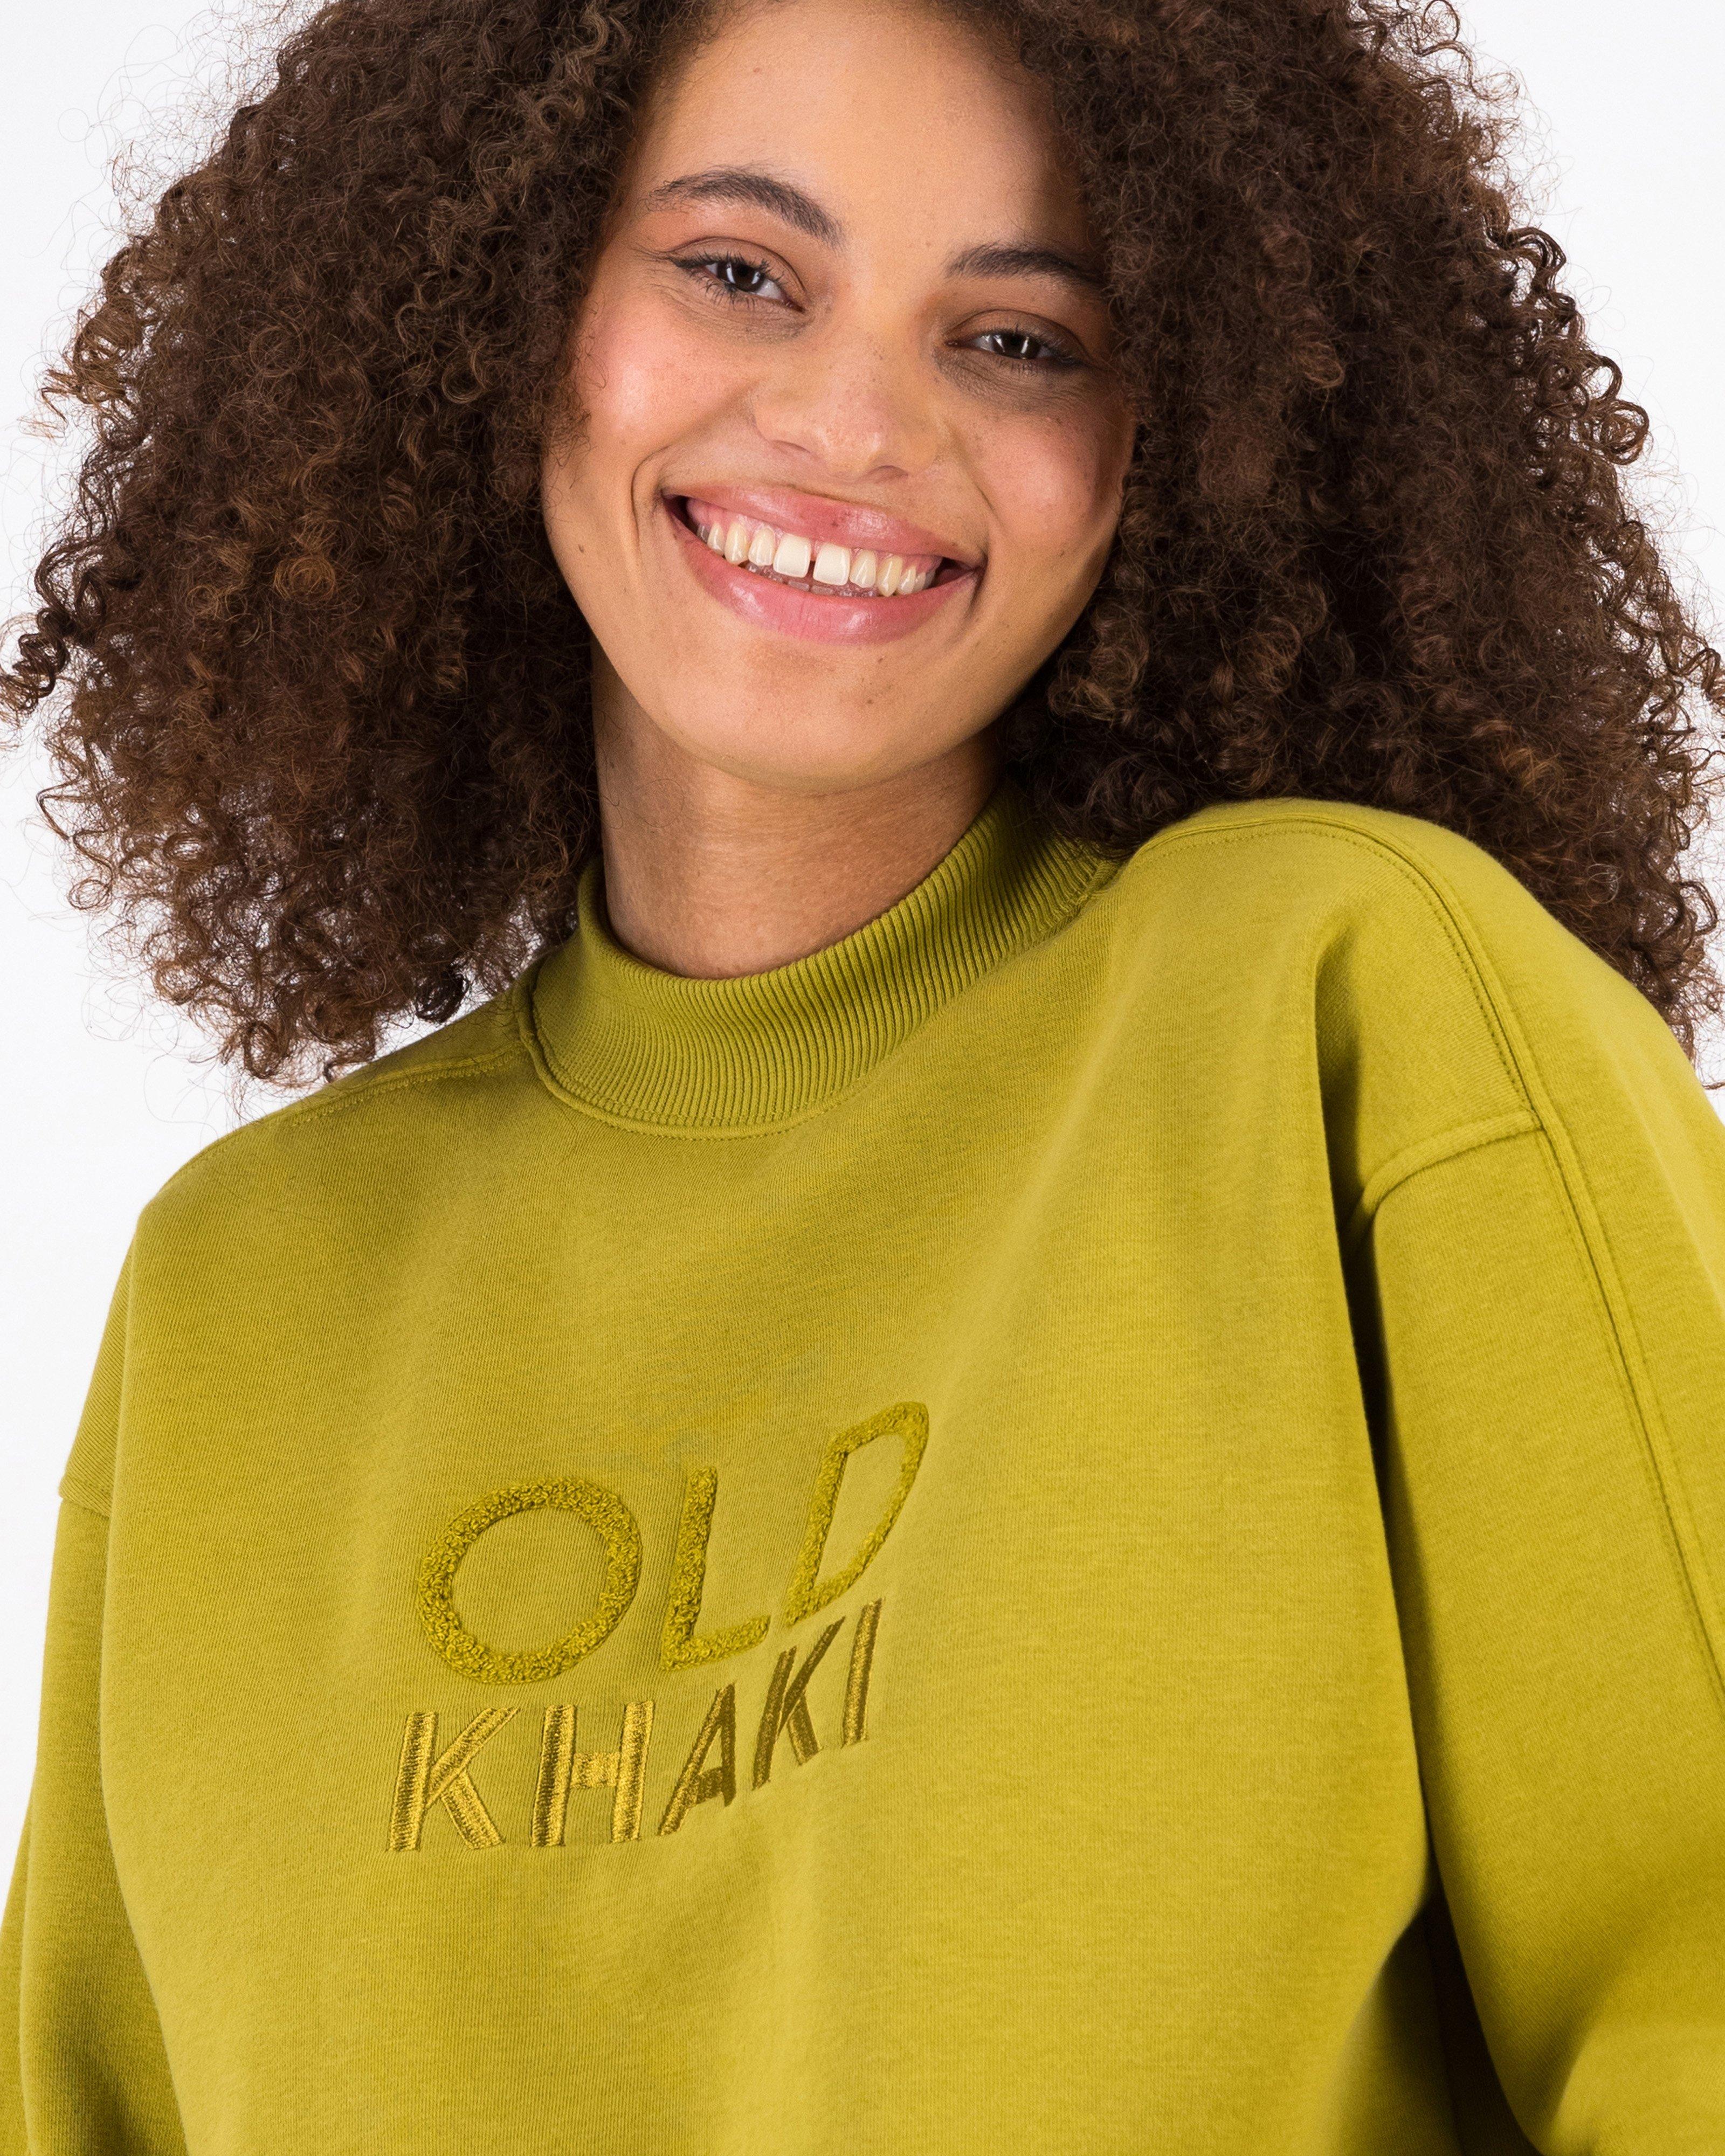 Old Khaki Women’s Lana Turtle Neck Top -  Chartreuse